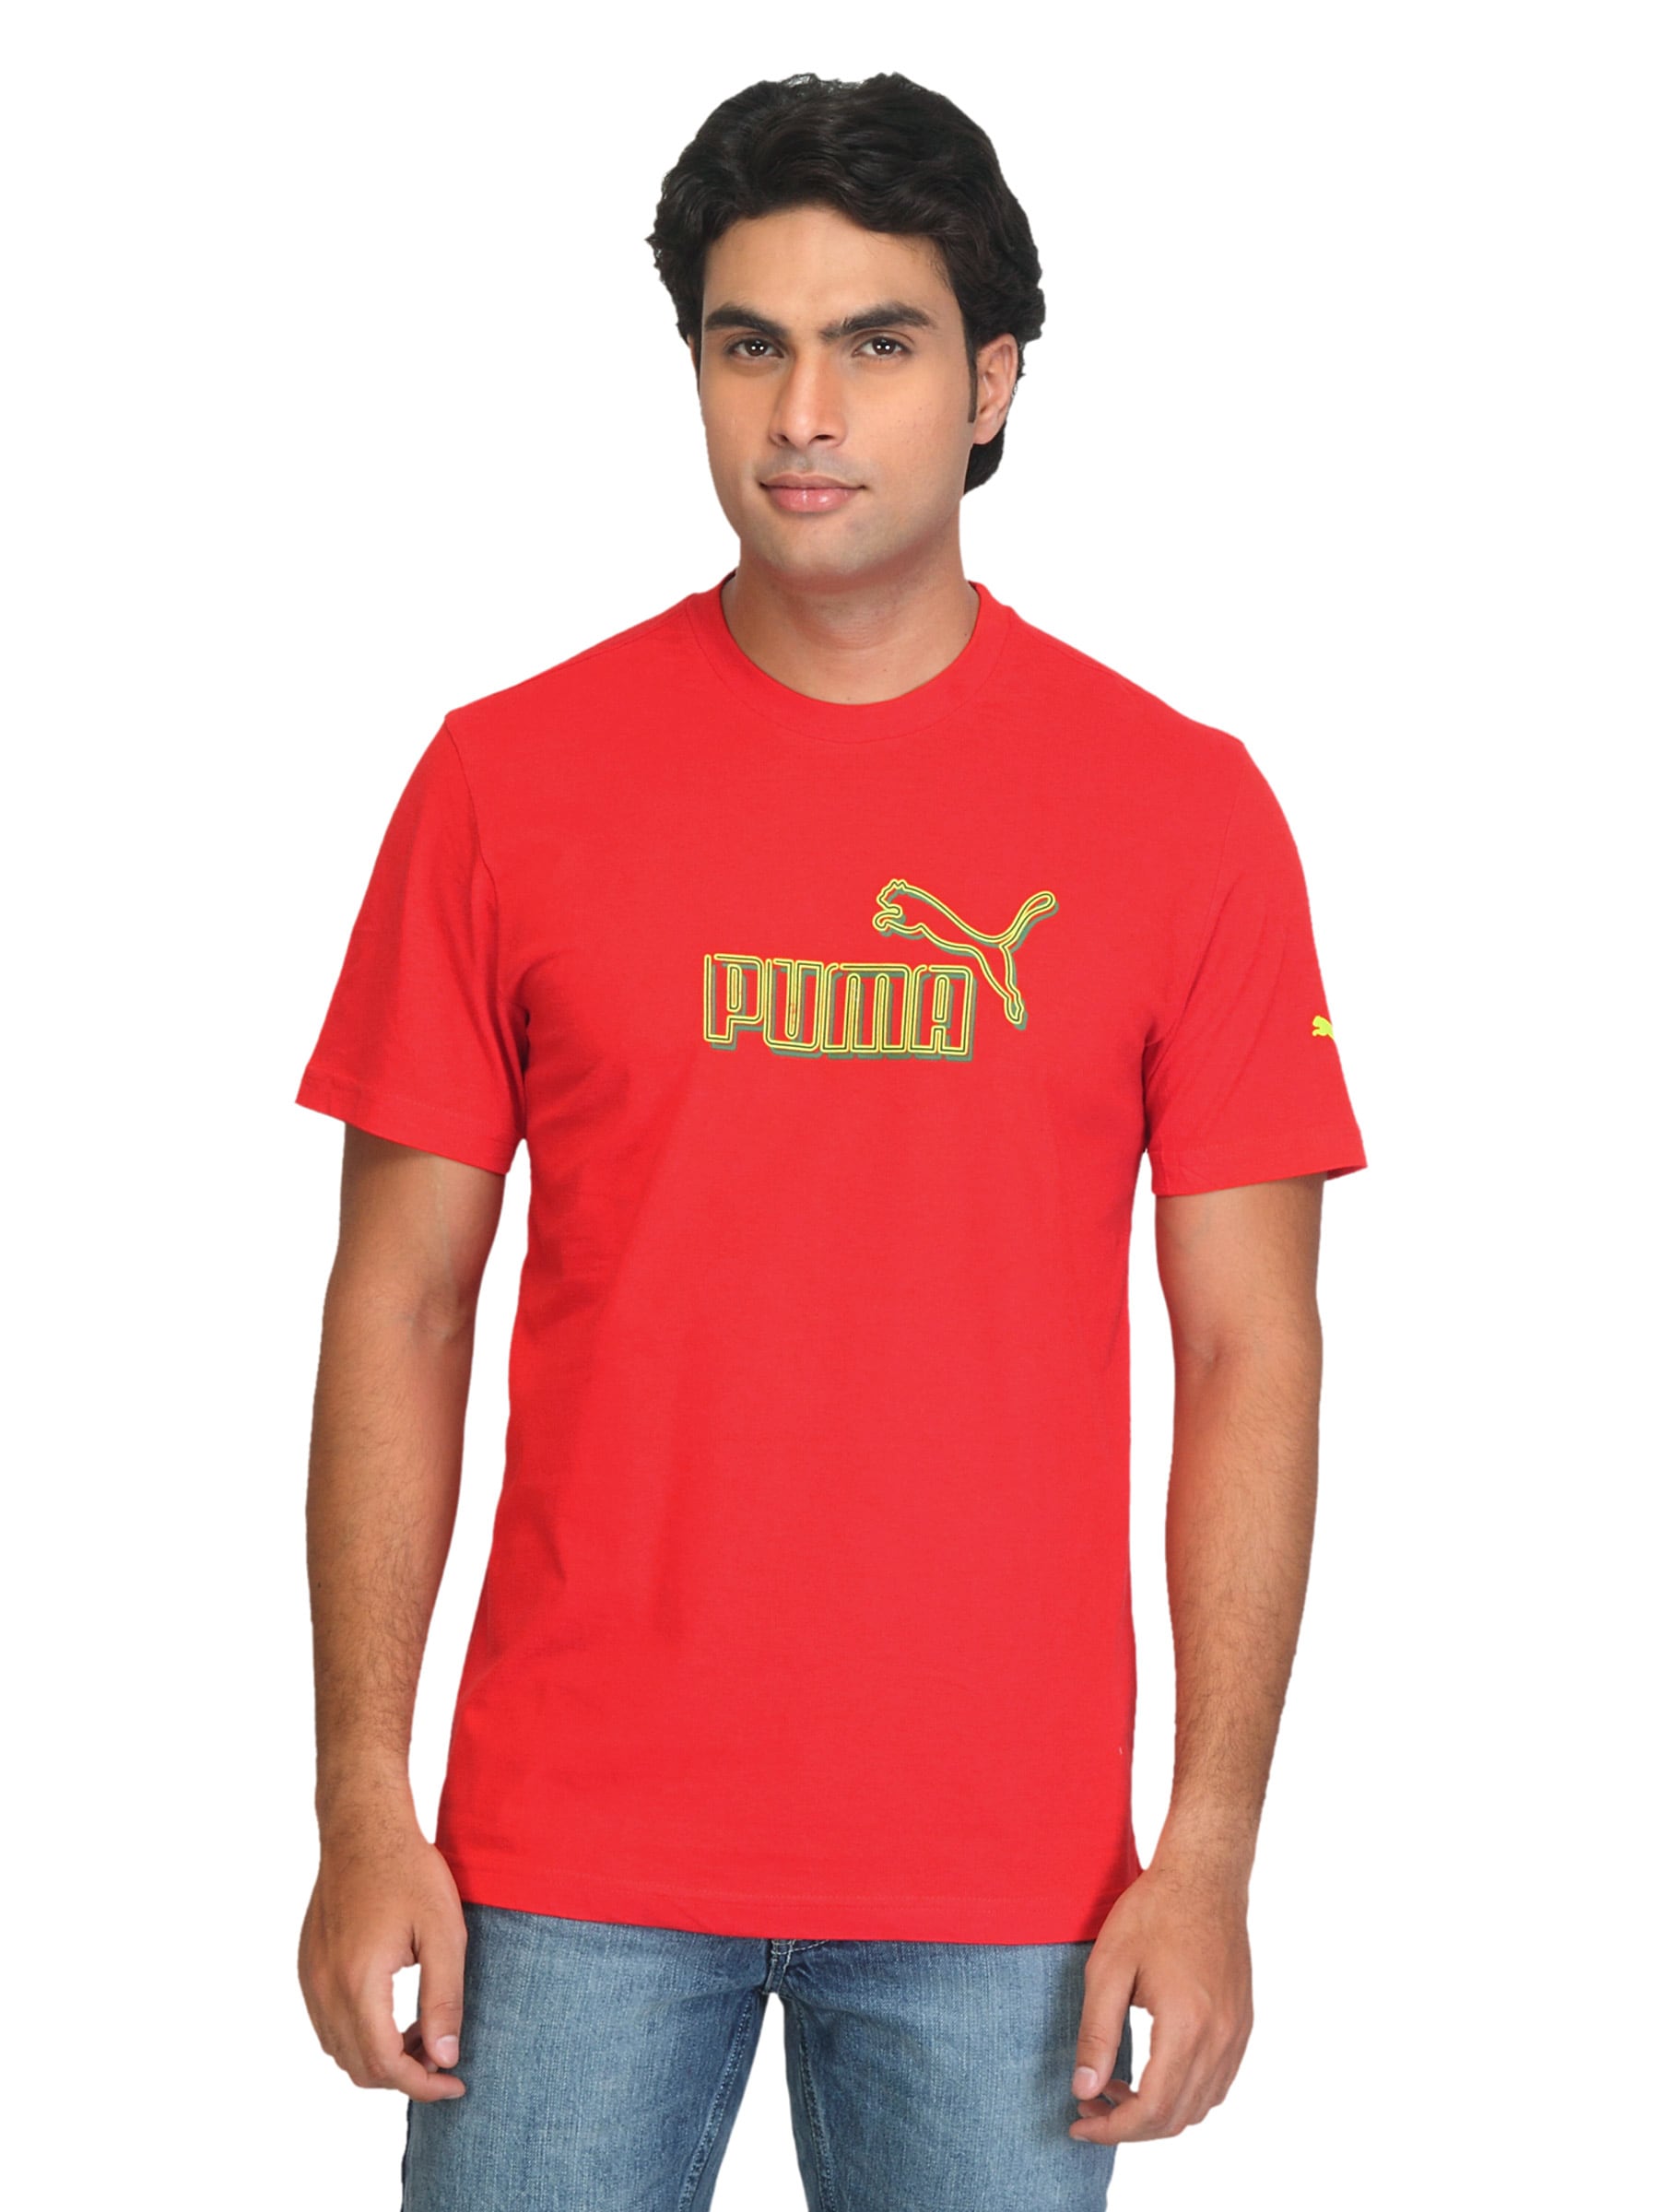 Puma Men Calonge Graphic Red T-shirt